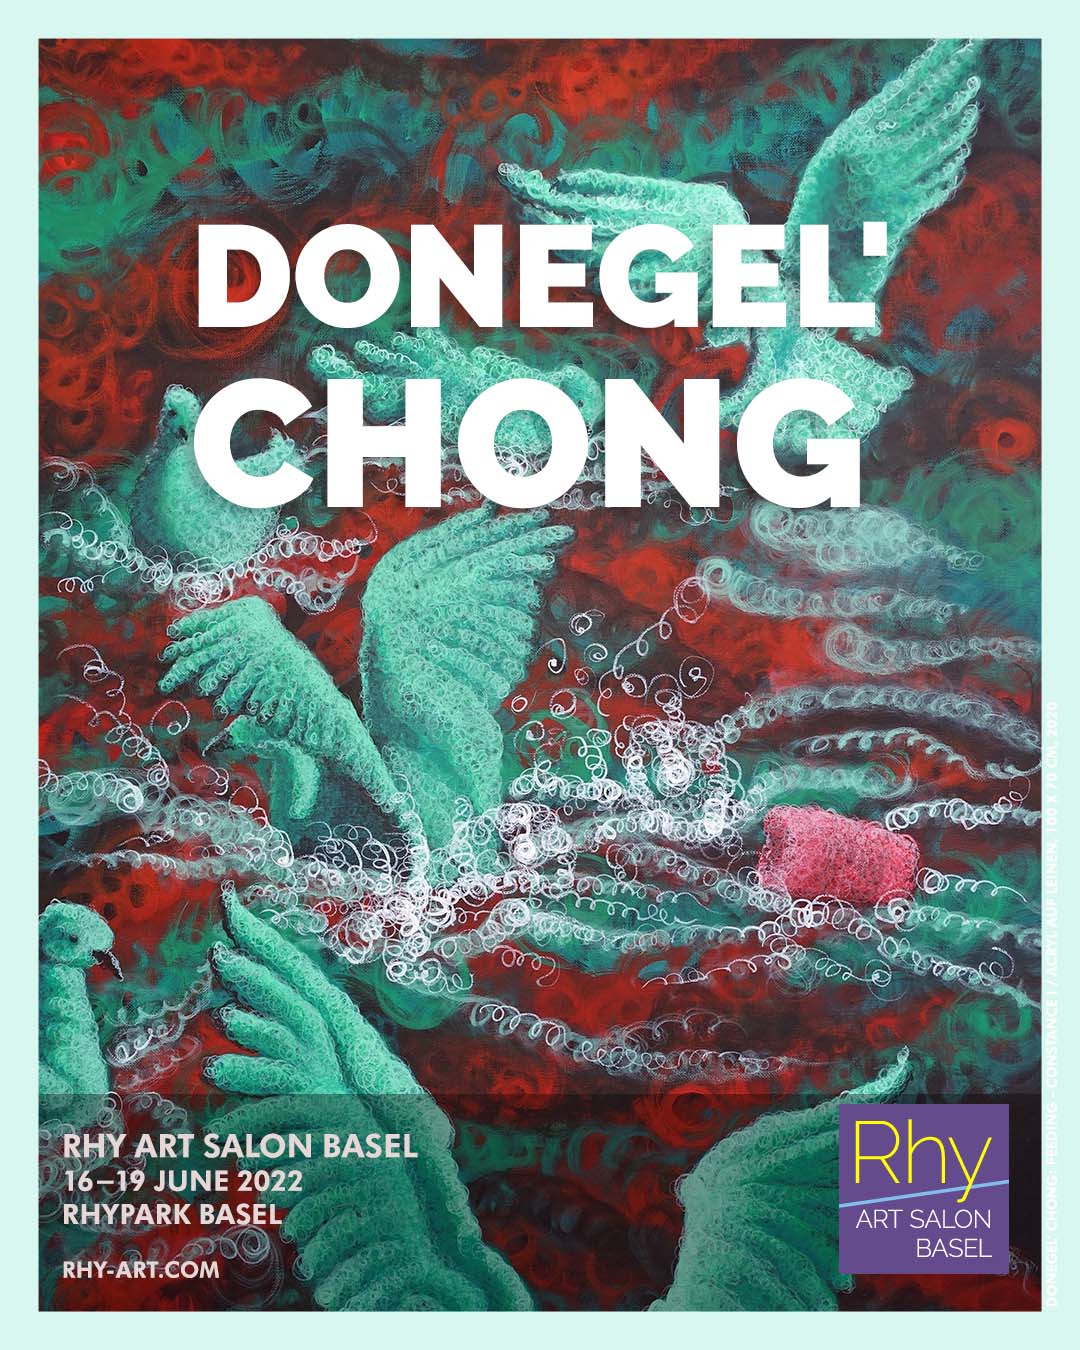 Donegel' Chong at Rhy Art Salon Basel 2022